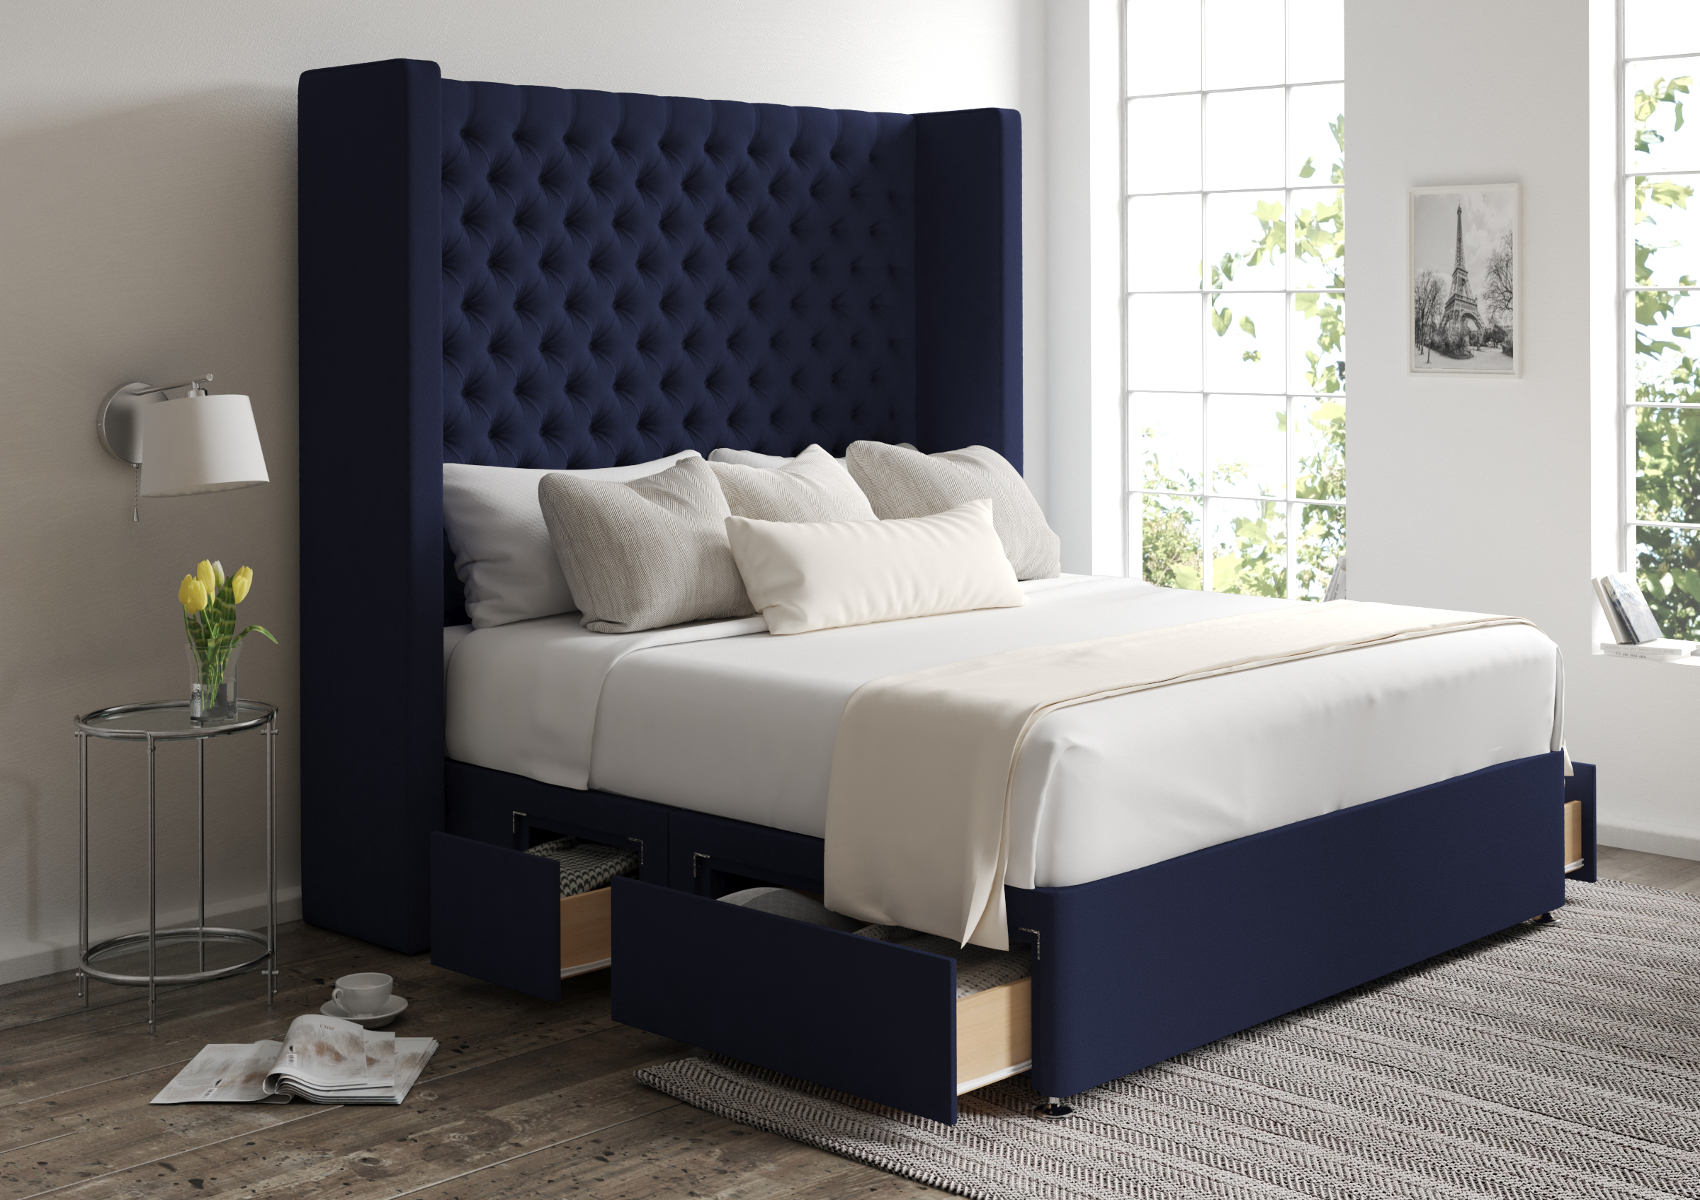 View Emma Hugo Royal Upholstered King Size Storage Bed Time4Sleep information